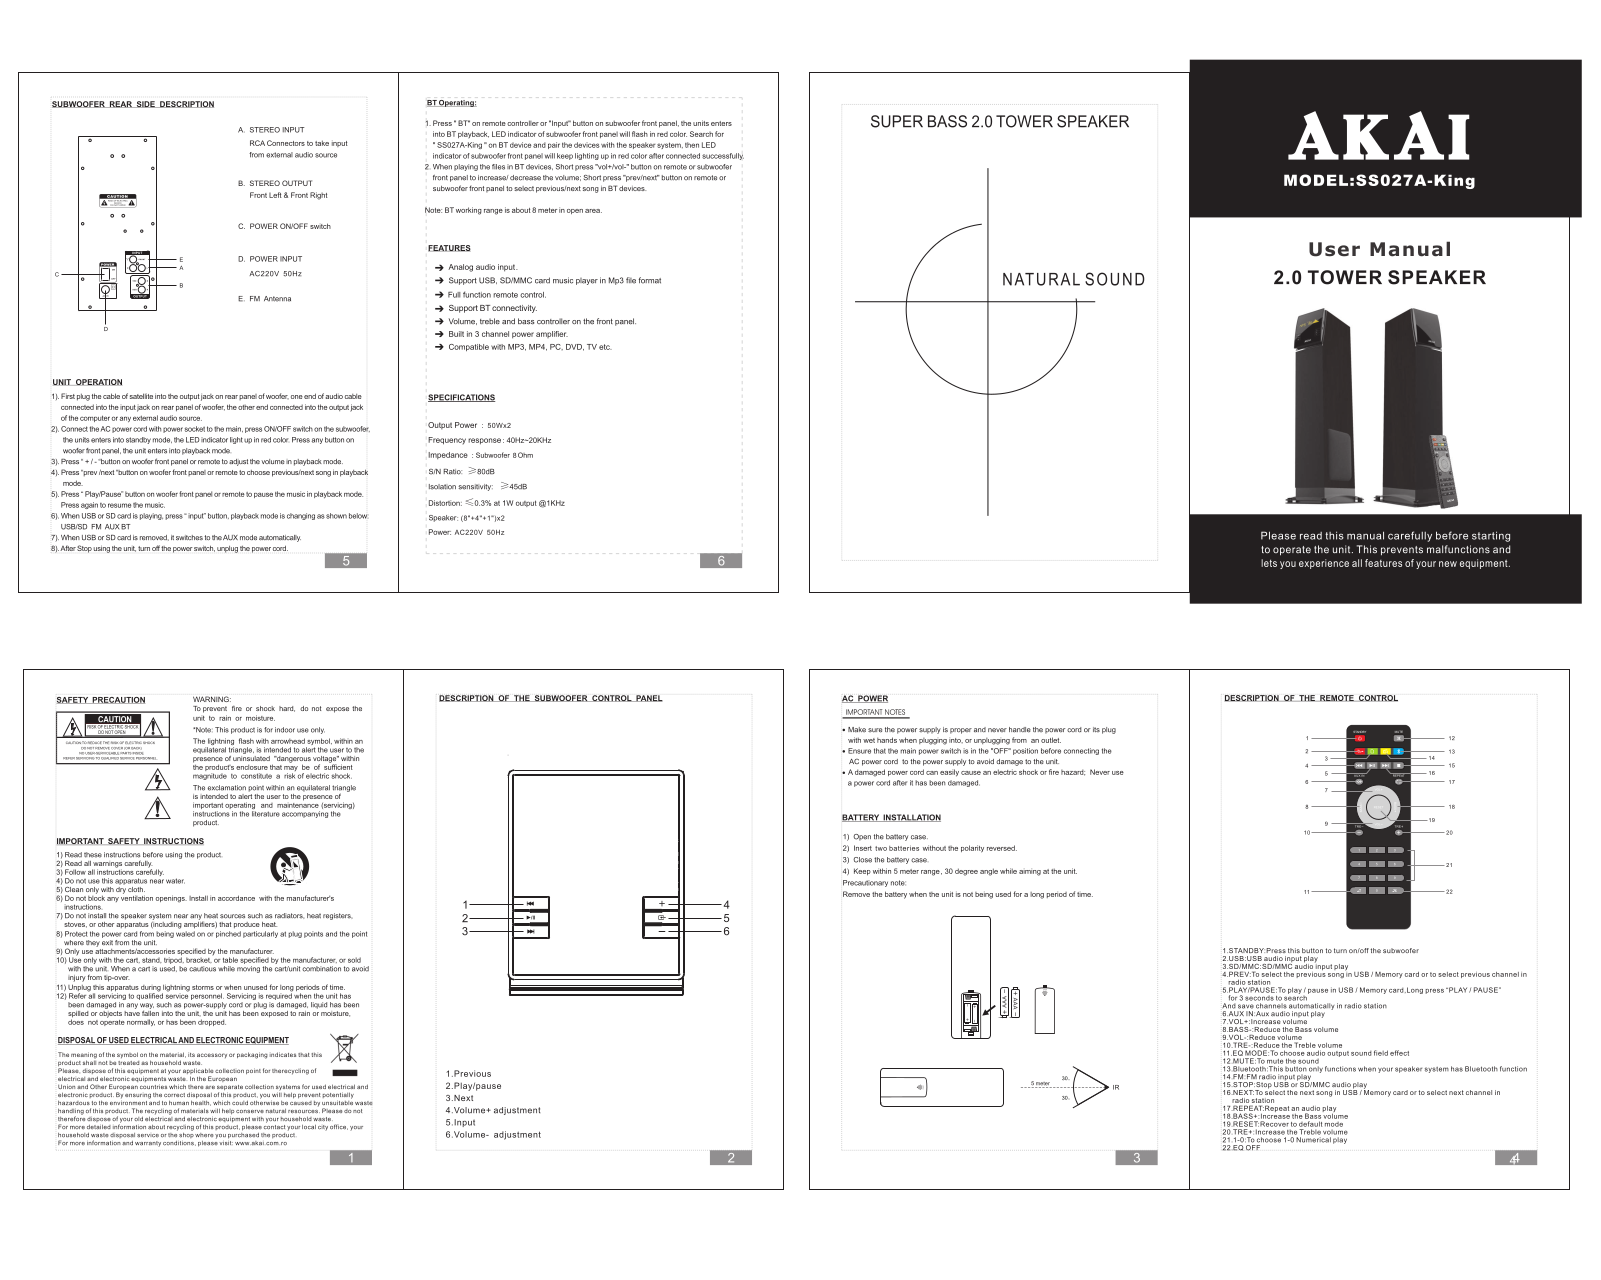 AKAI SS027A-KING User Manual